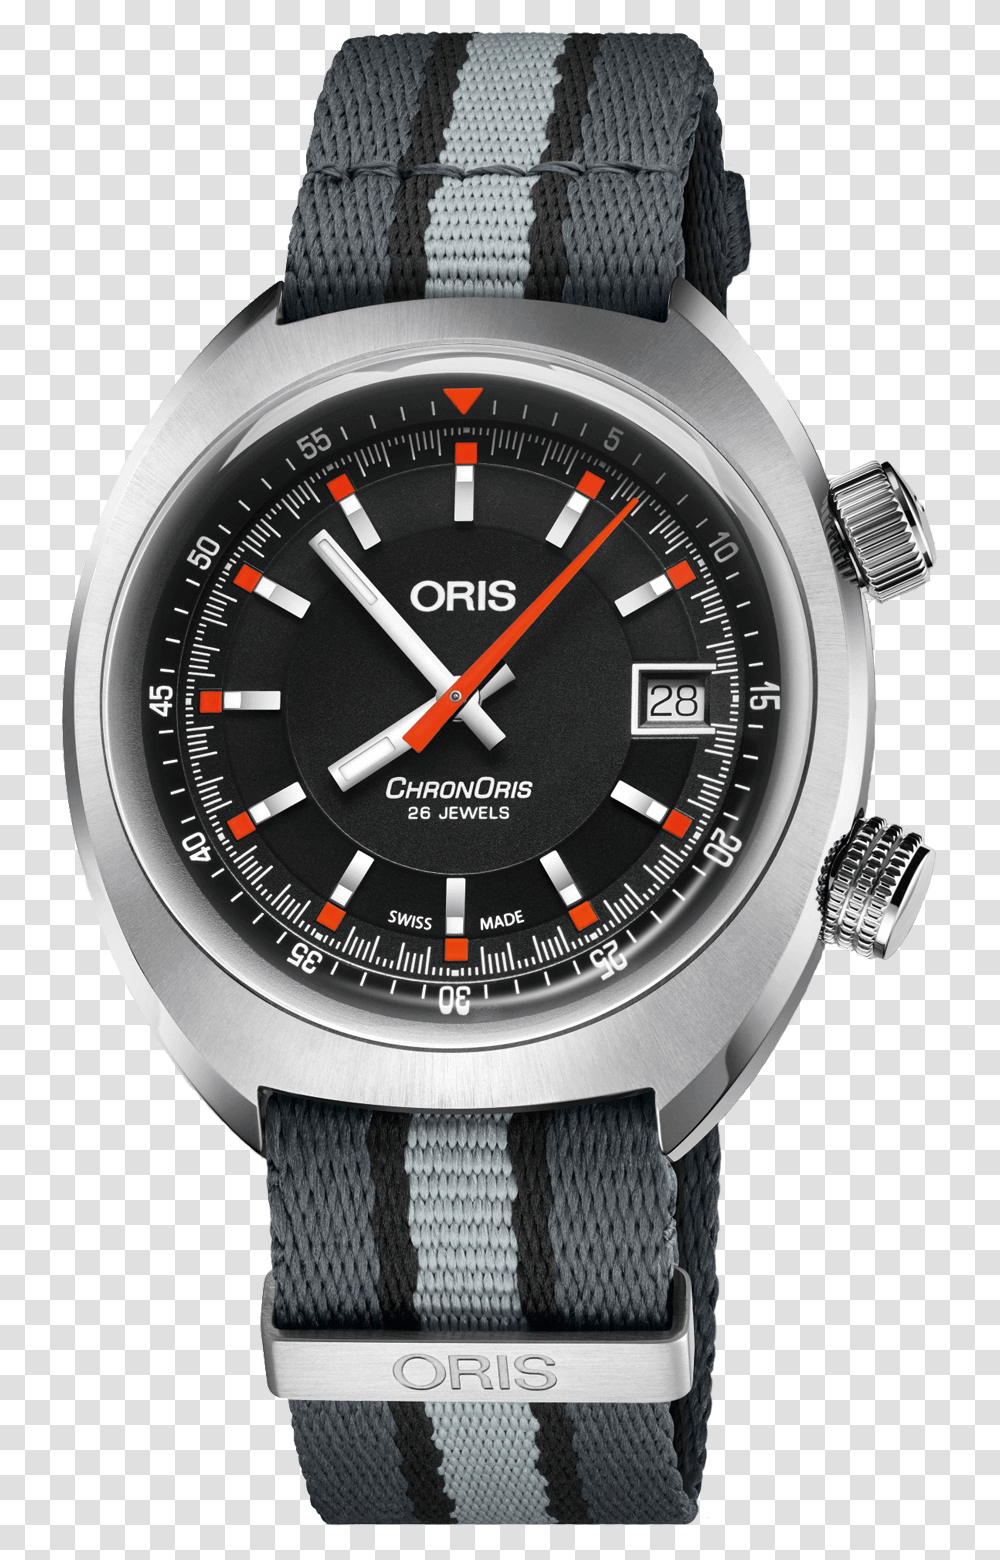 Oris Oris Chronoris, Wristwatch, Digital Watch Transparent Png